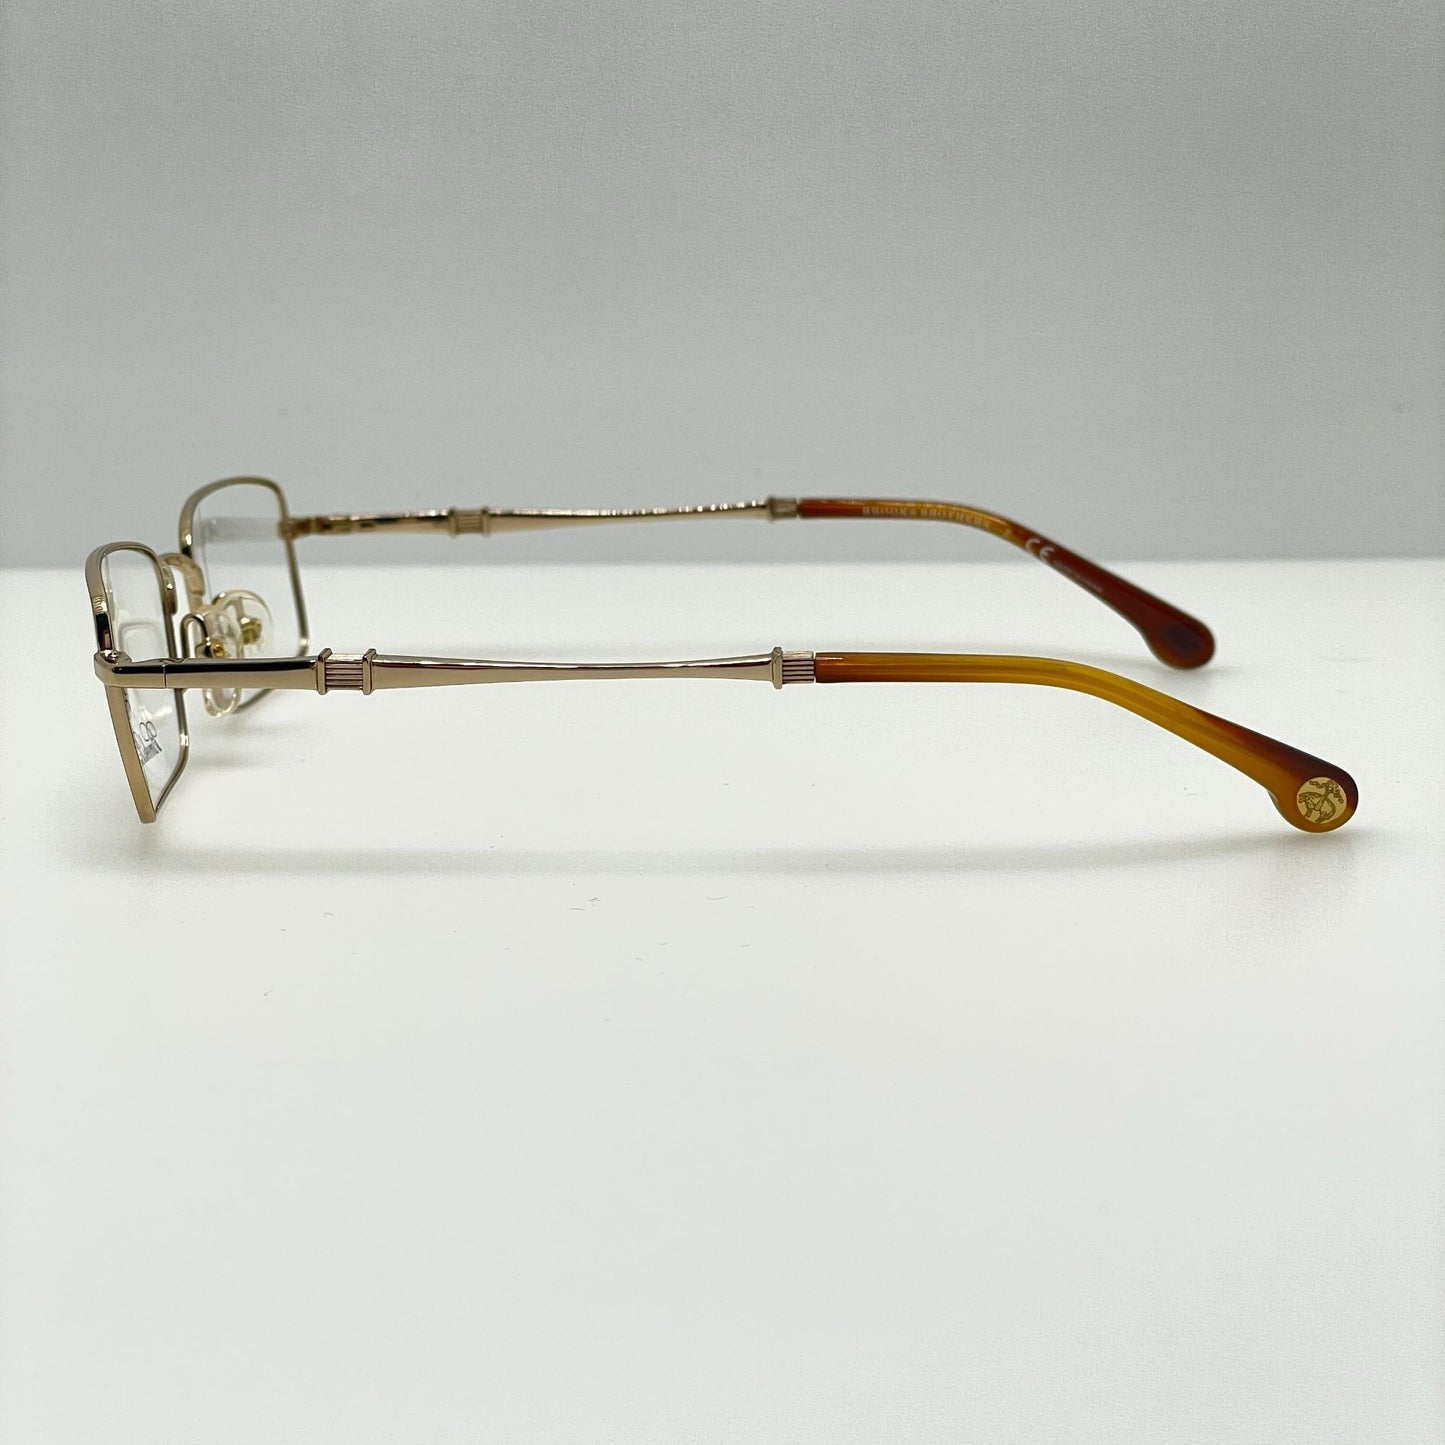 Brooks Brothers Eyeglasses Eye Glasses Frames BB 465 1297 51-18-140